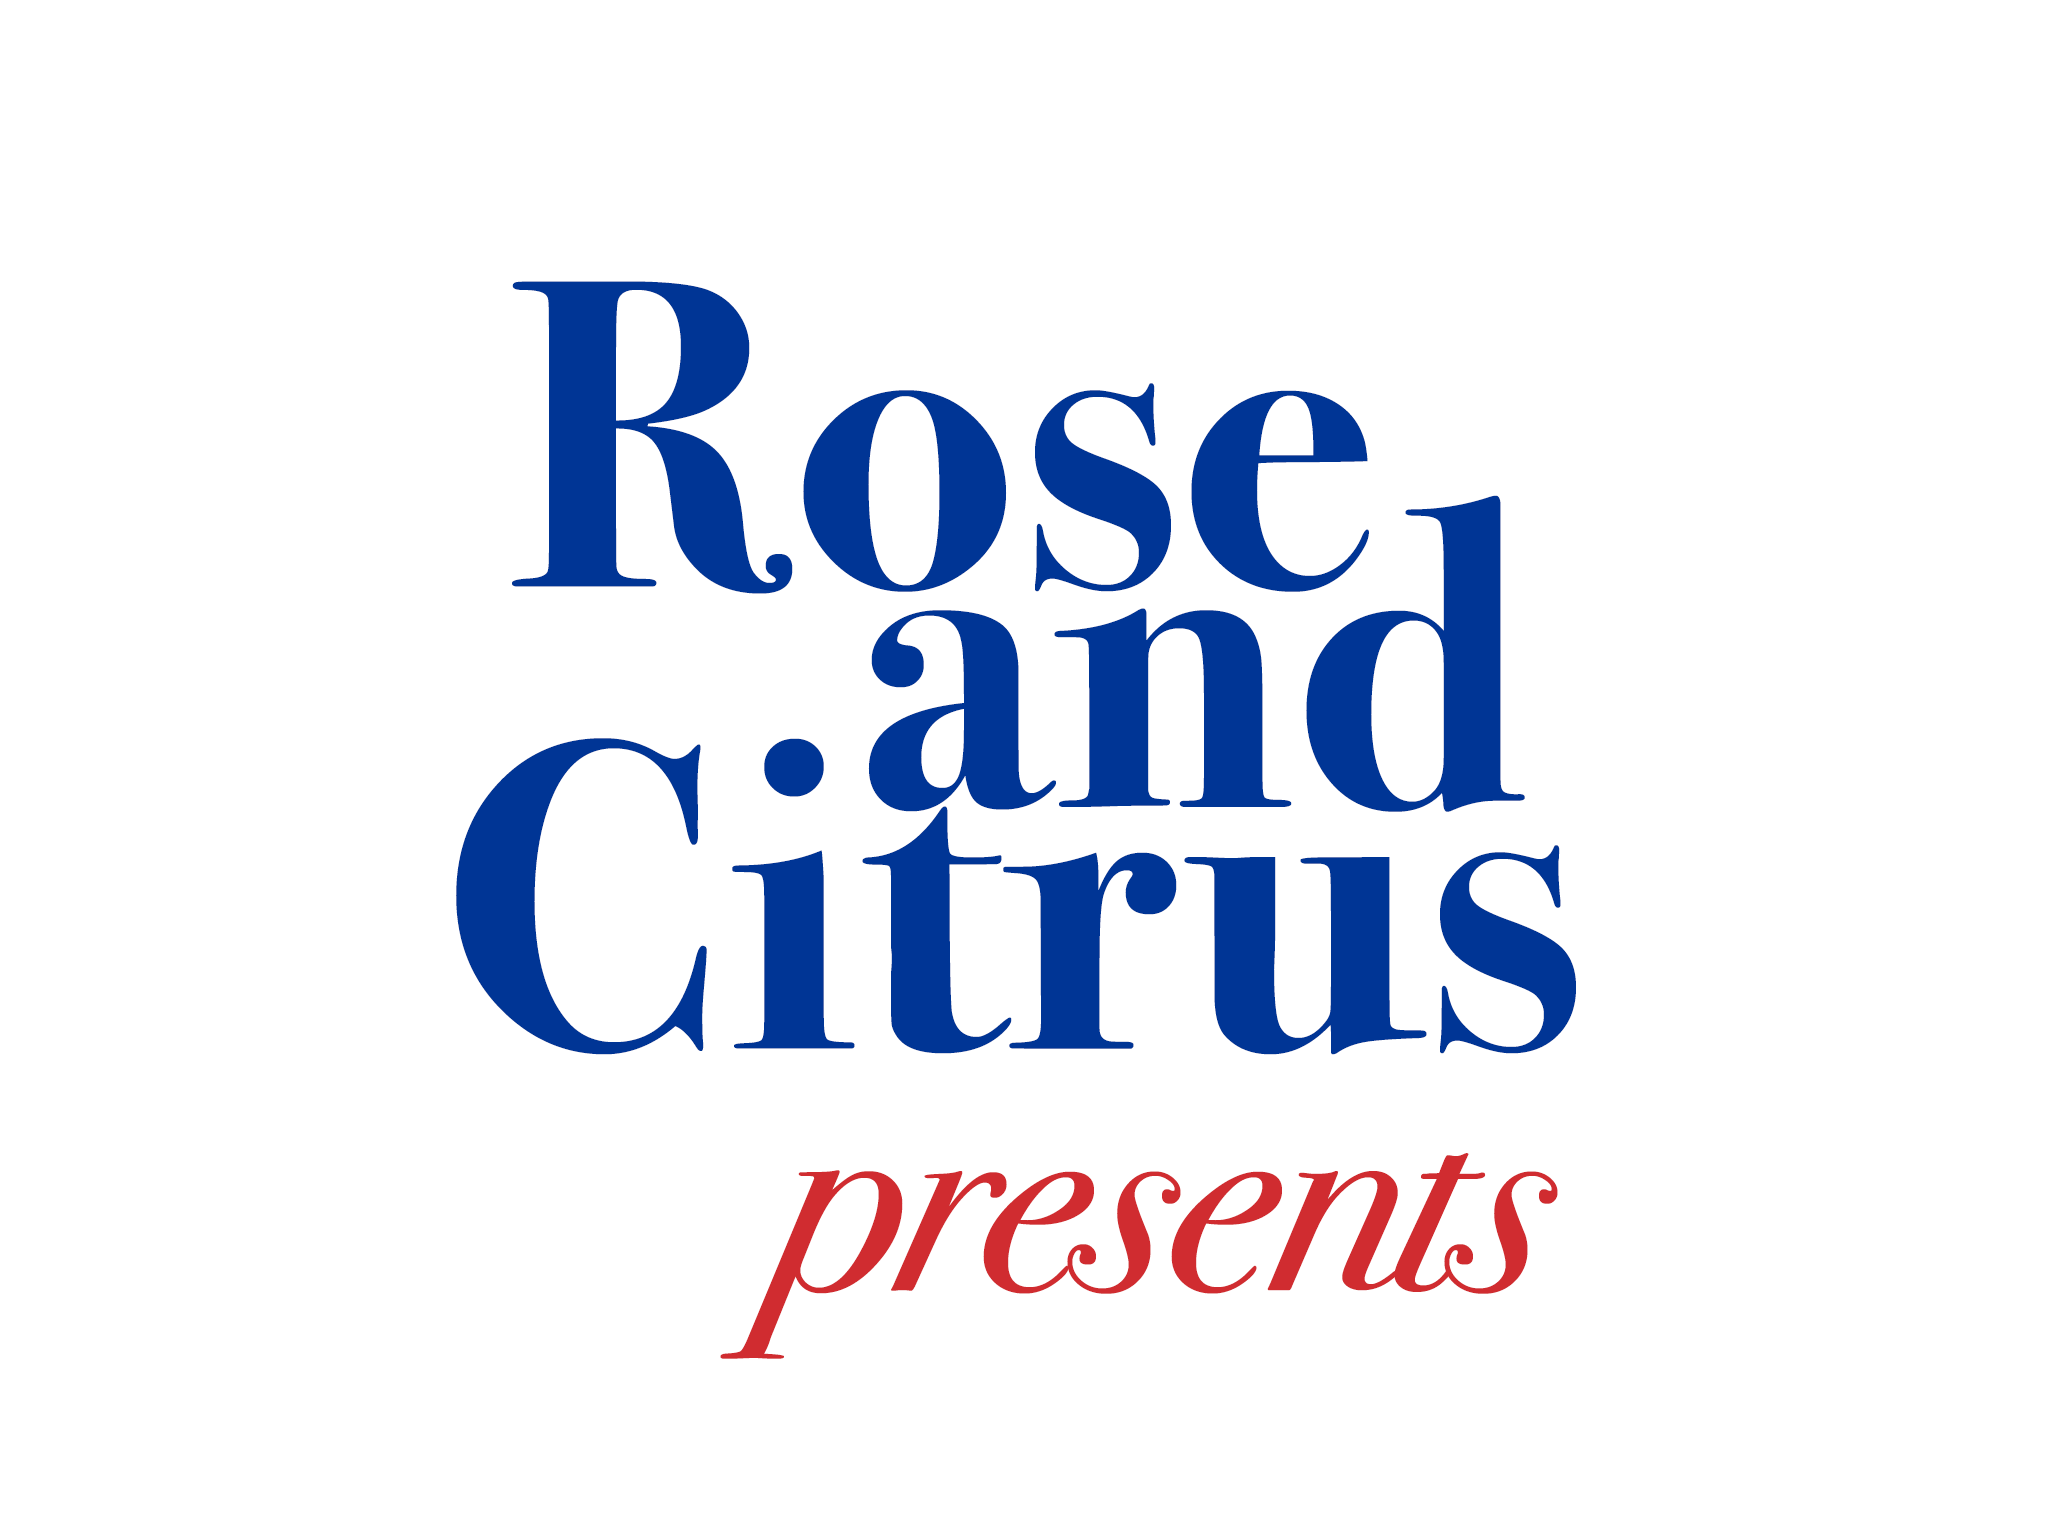 Rose and citrus presents thumbnail.